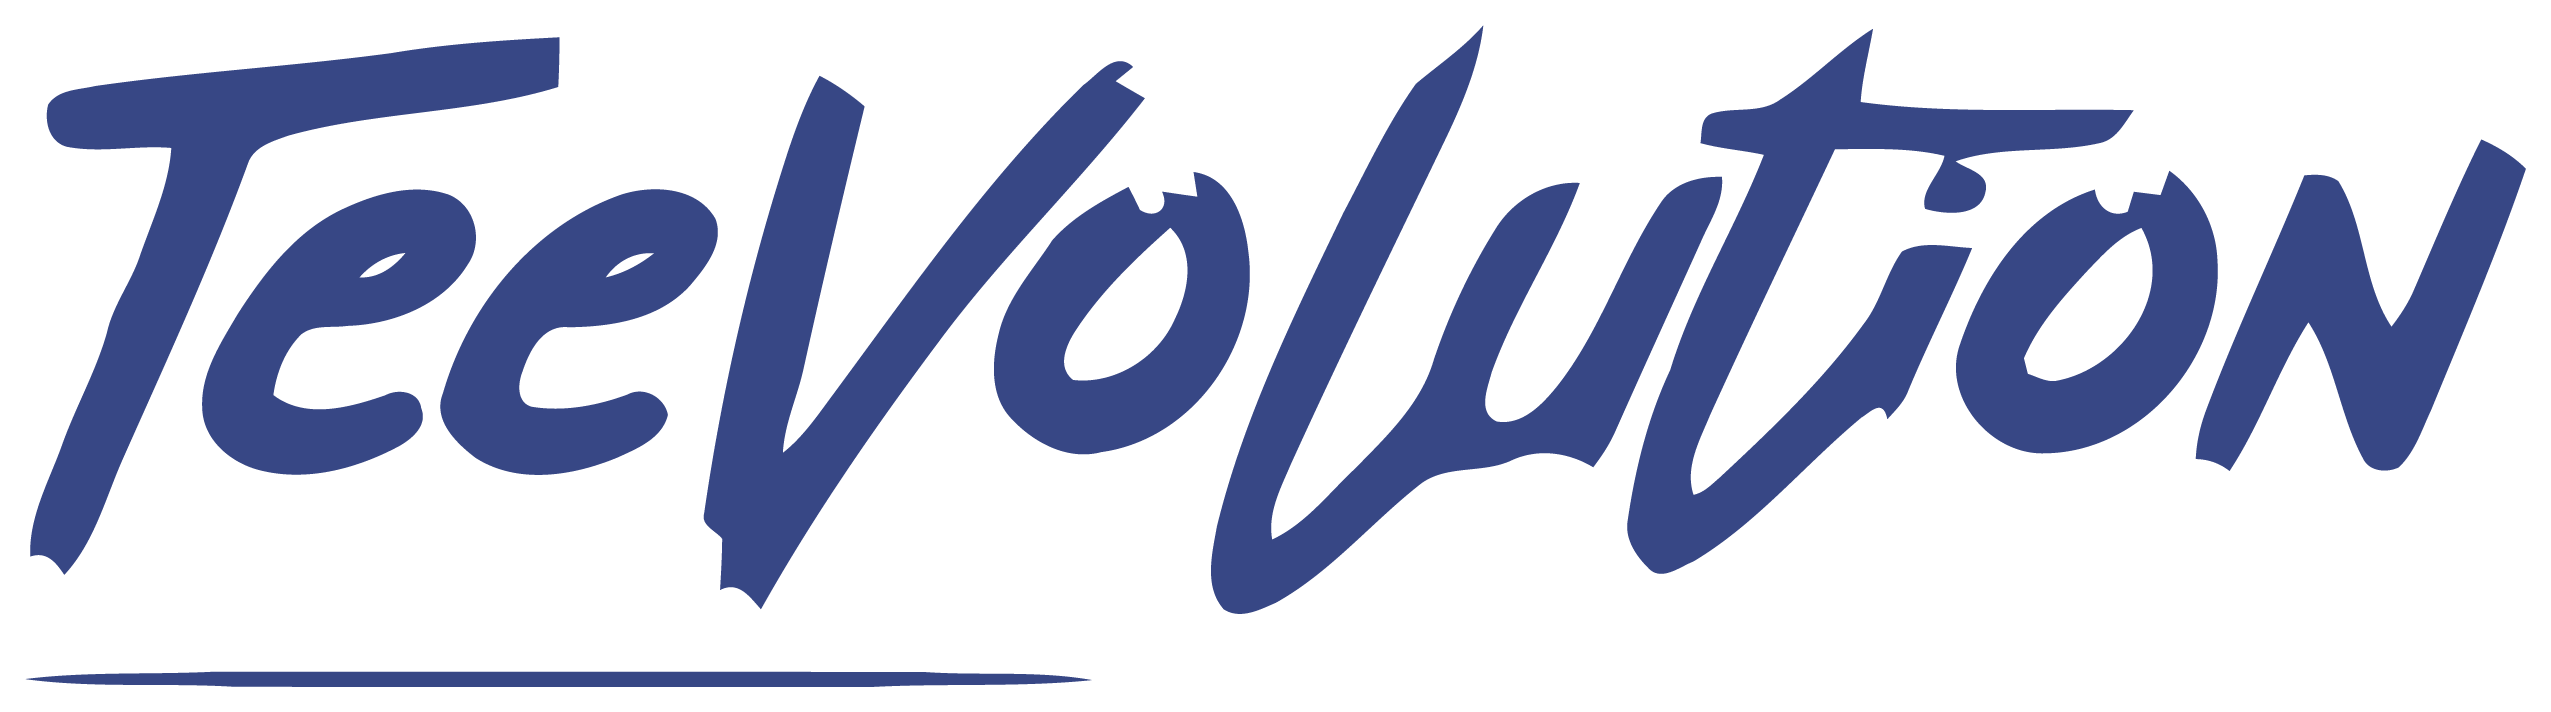 Teevolution logo